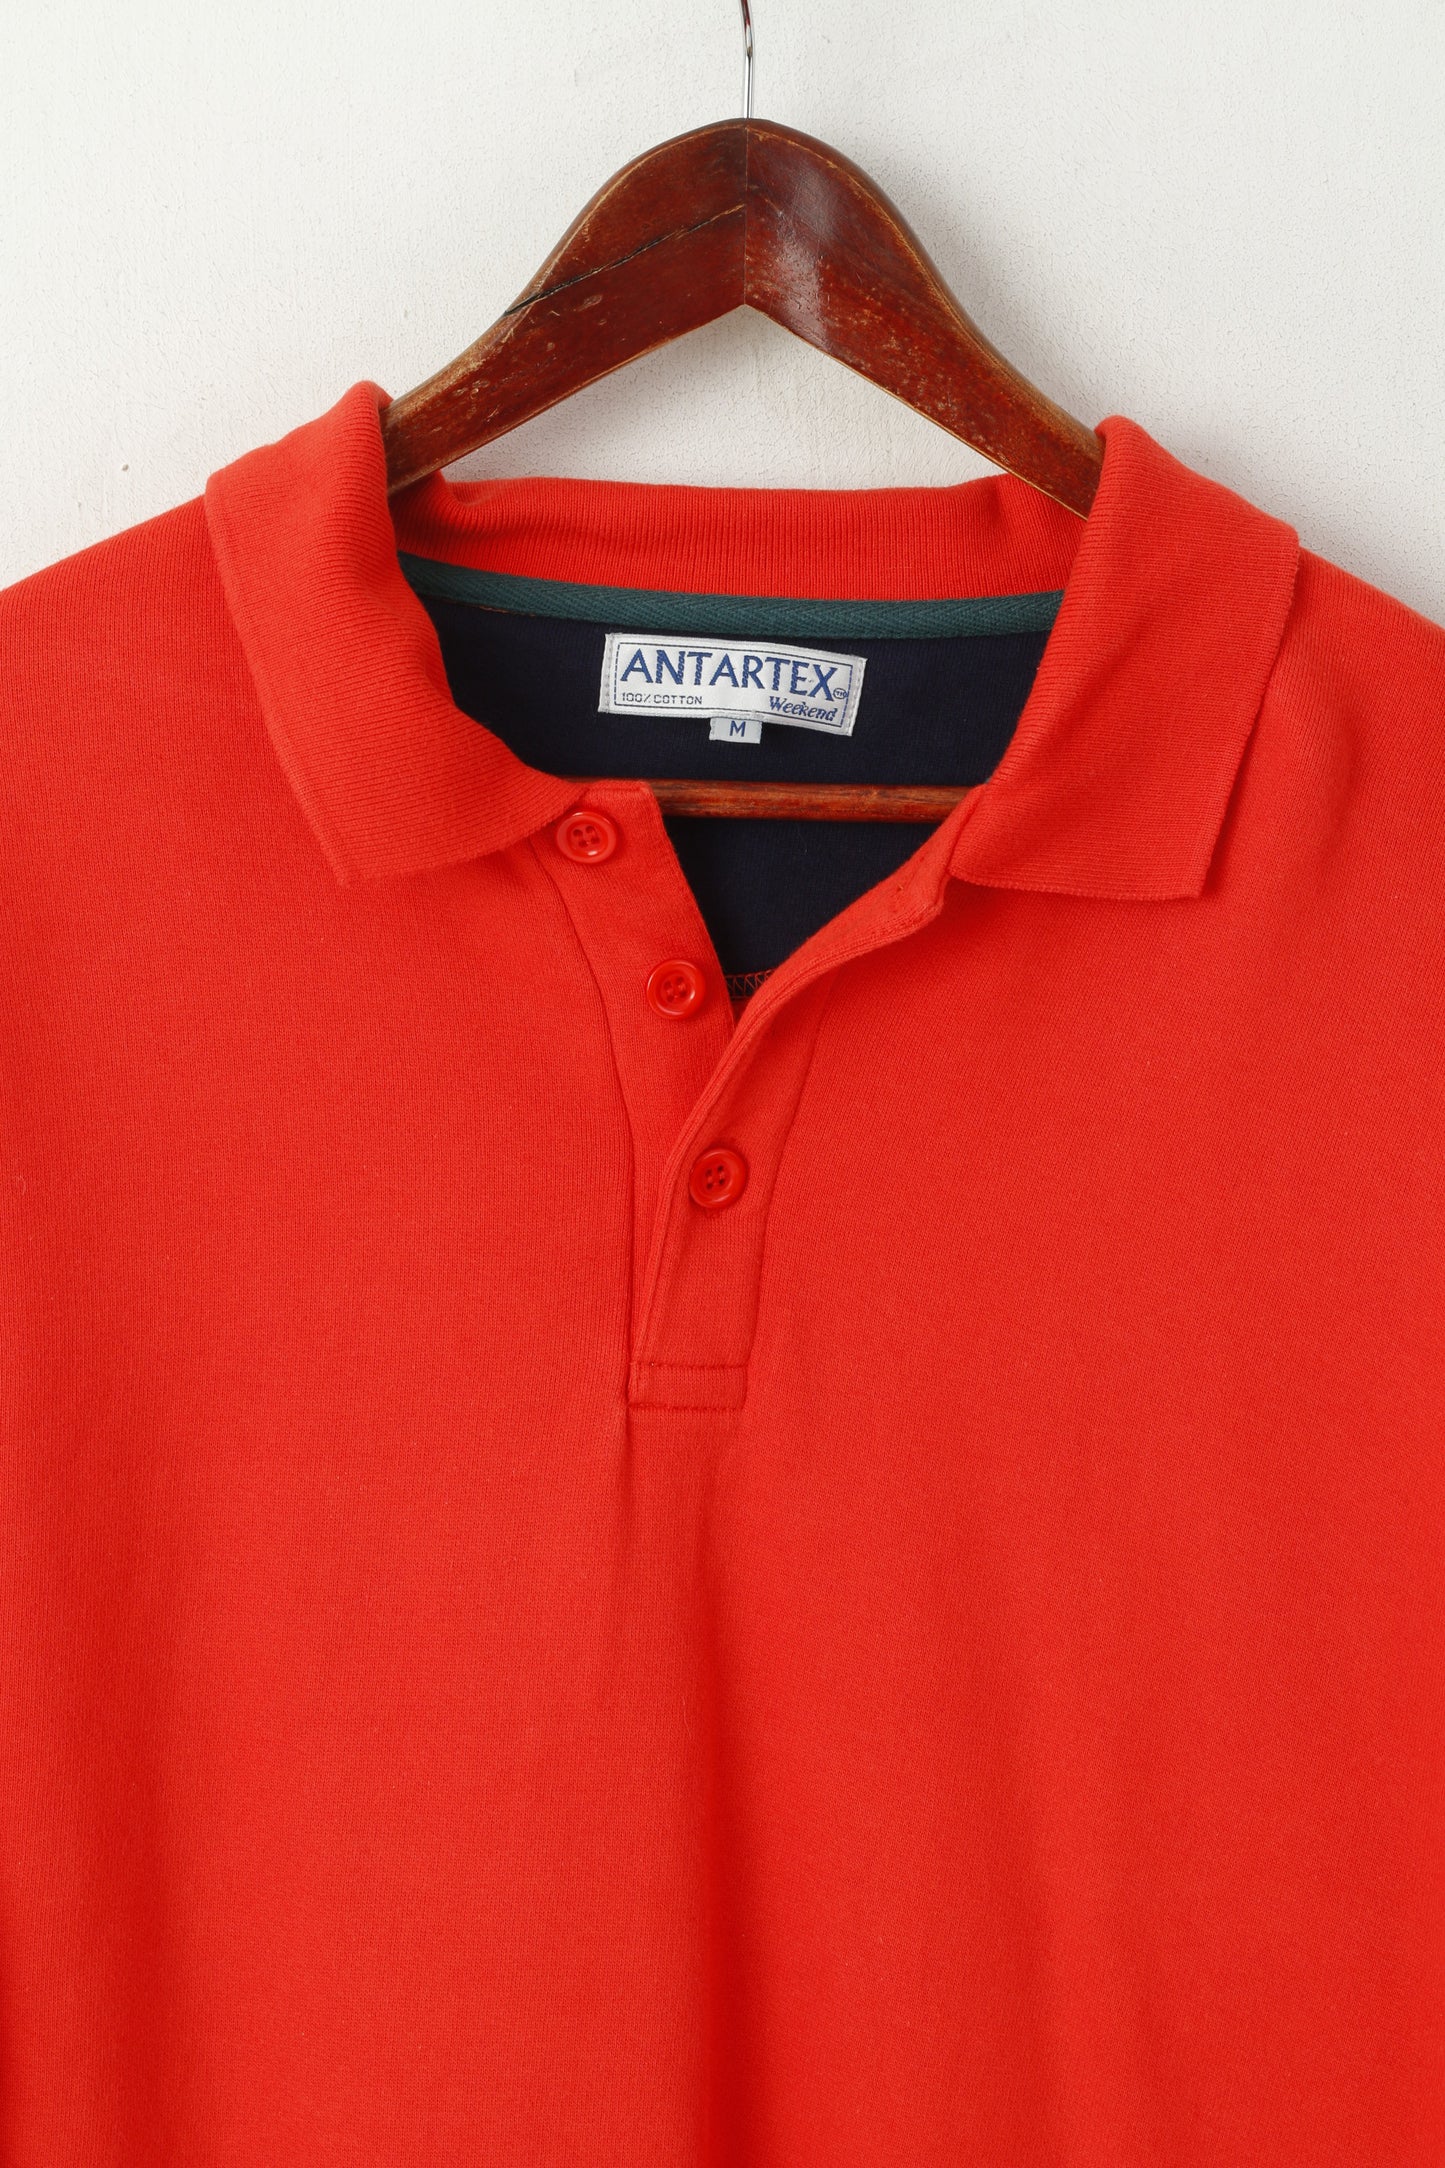 Antartex Weekend Men M Sweatshirt Orange Cotton Collared Casual Jumper Top